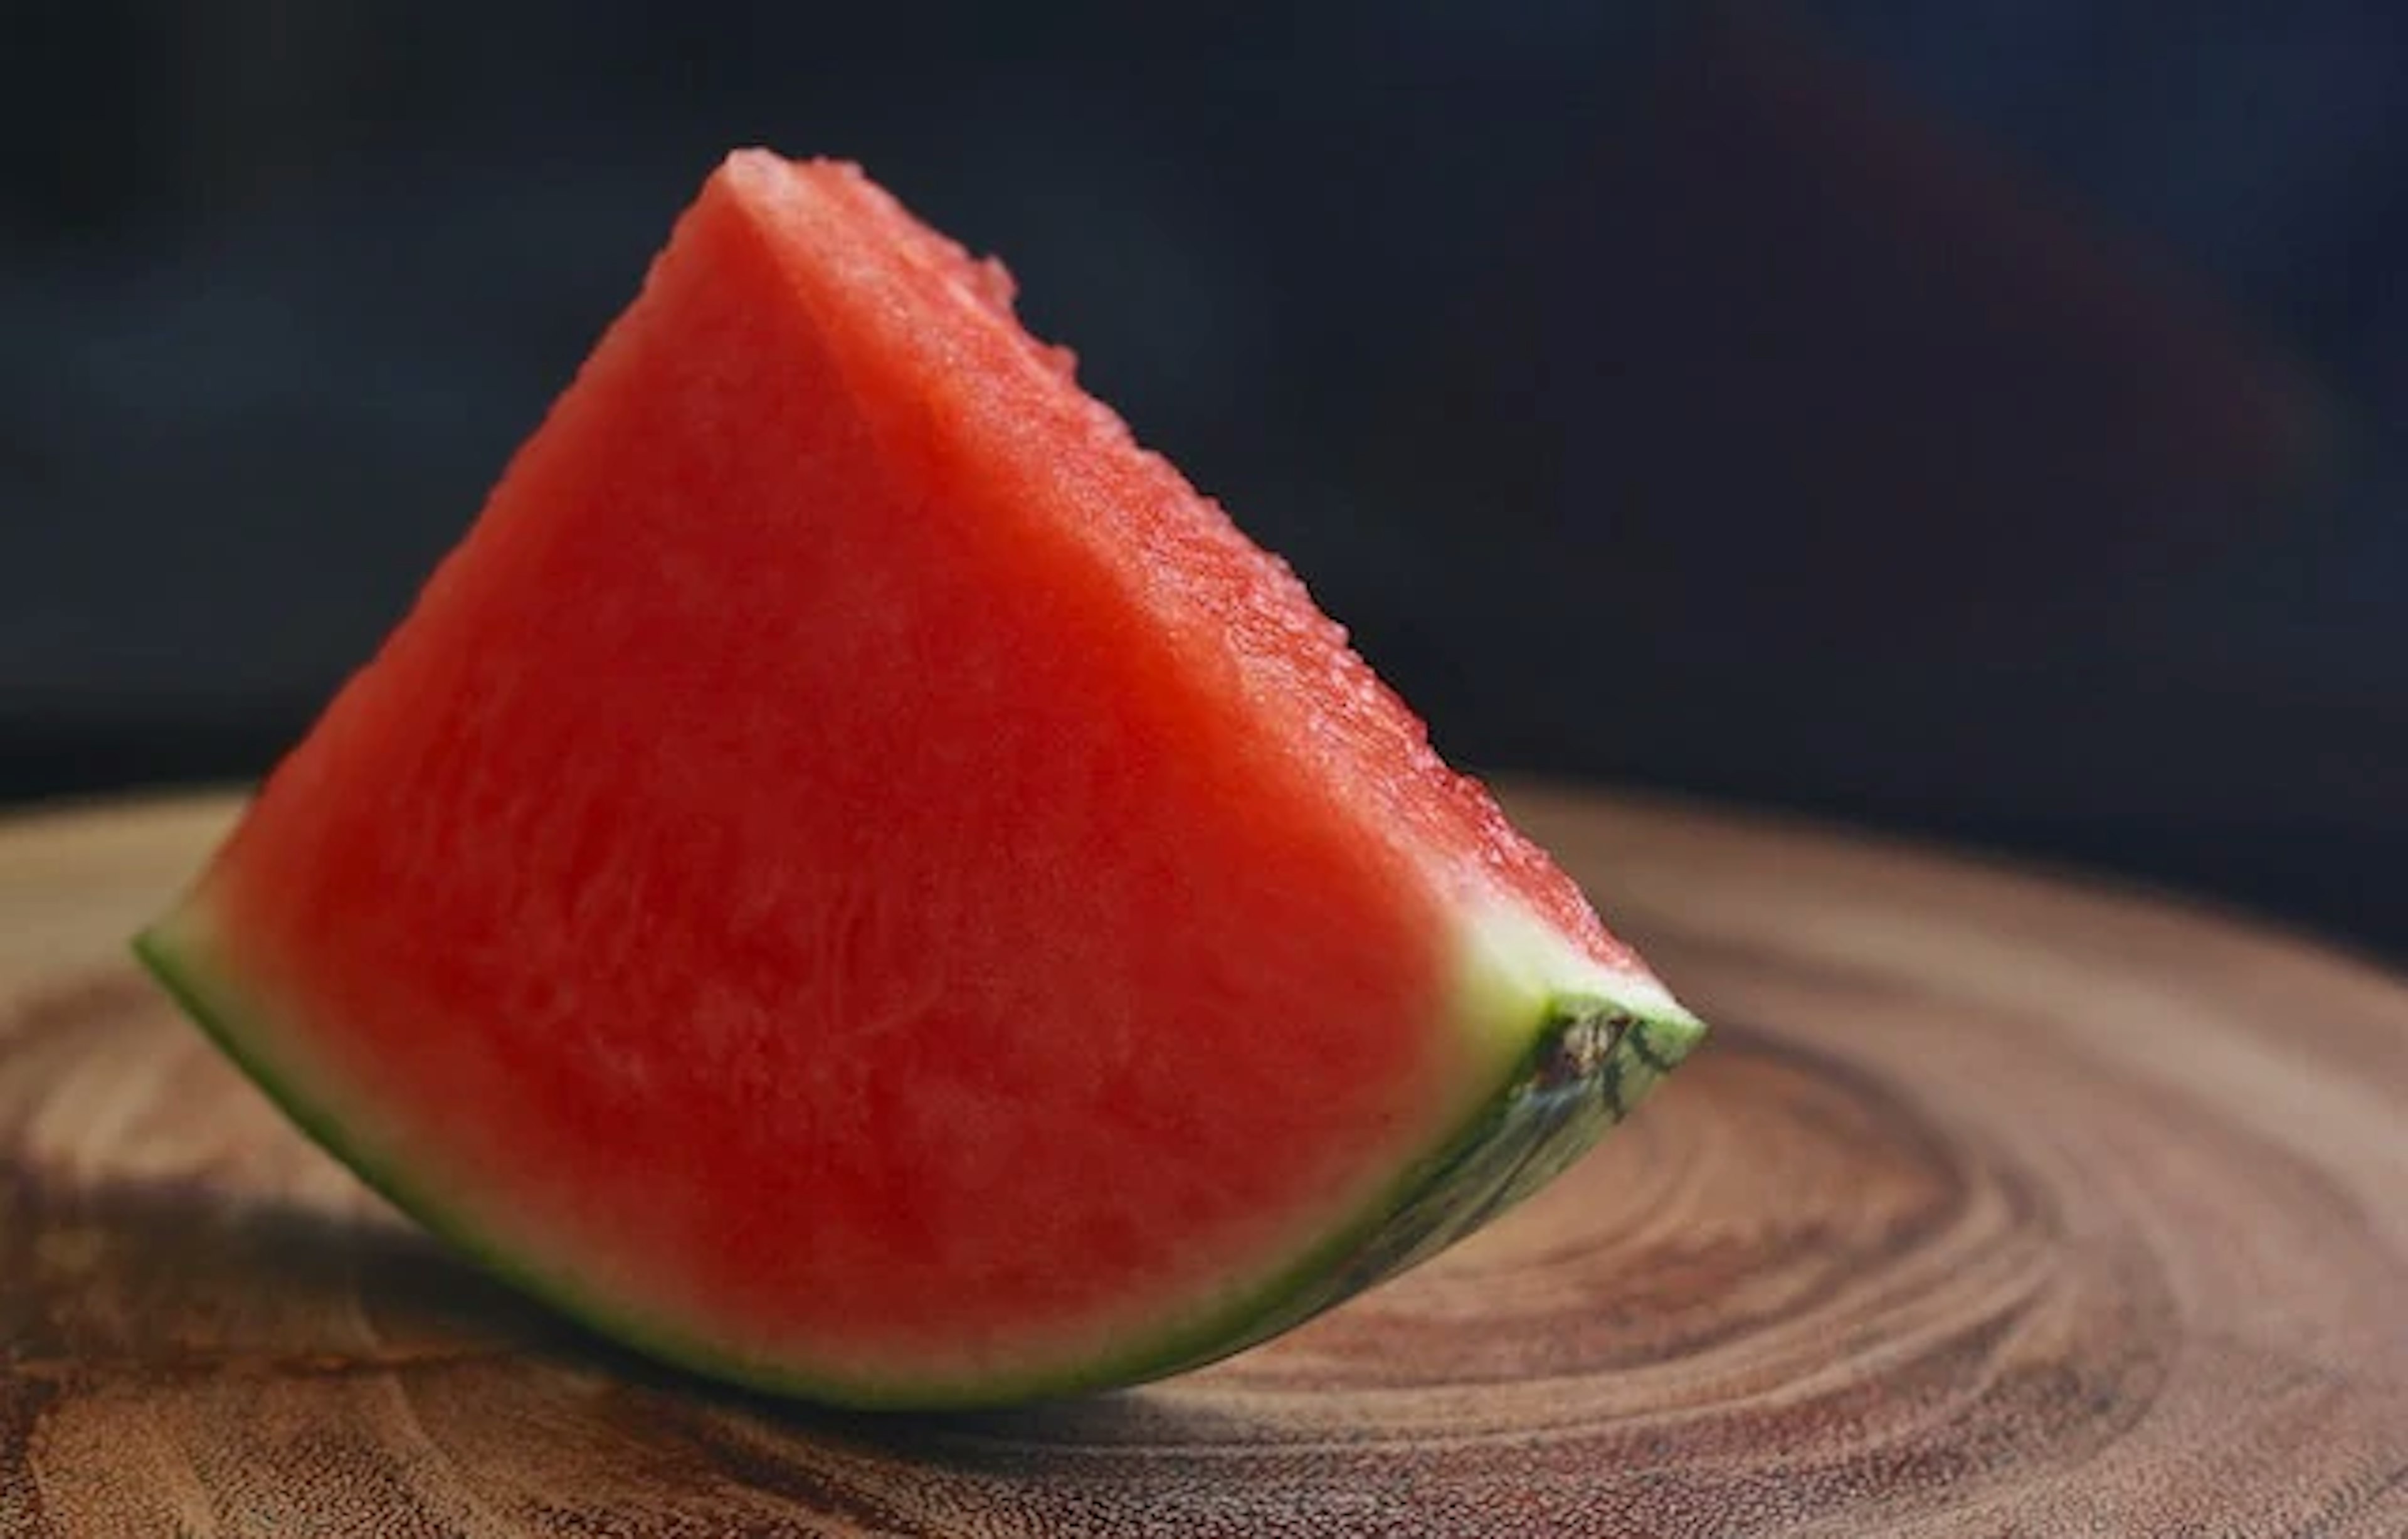 WatermelonDB in React Native (1/2)